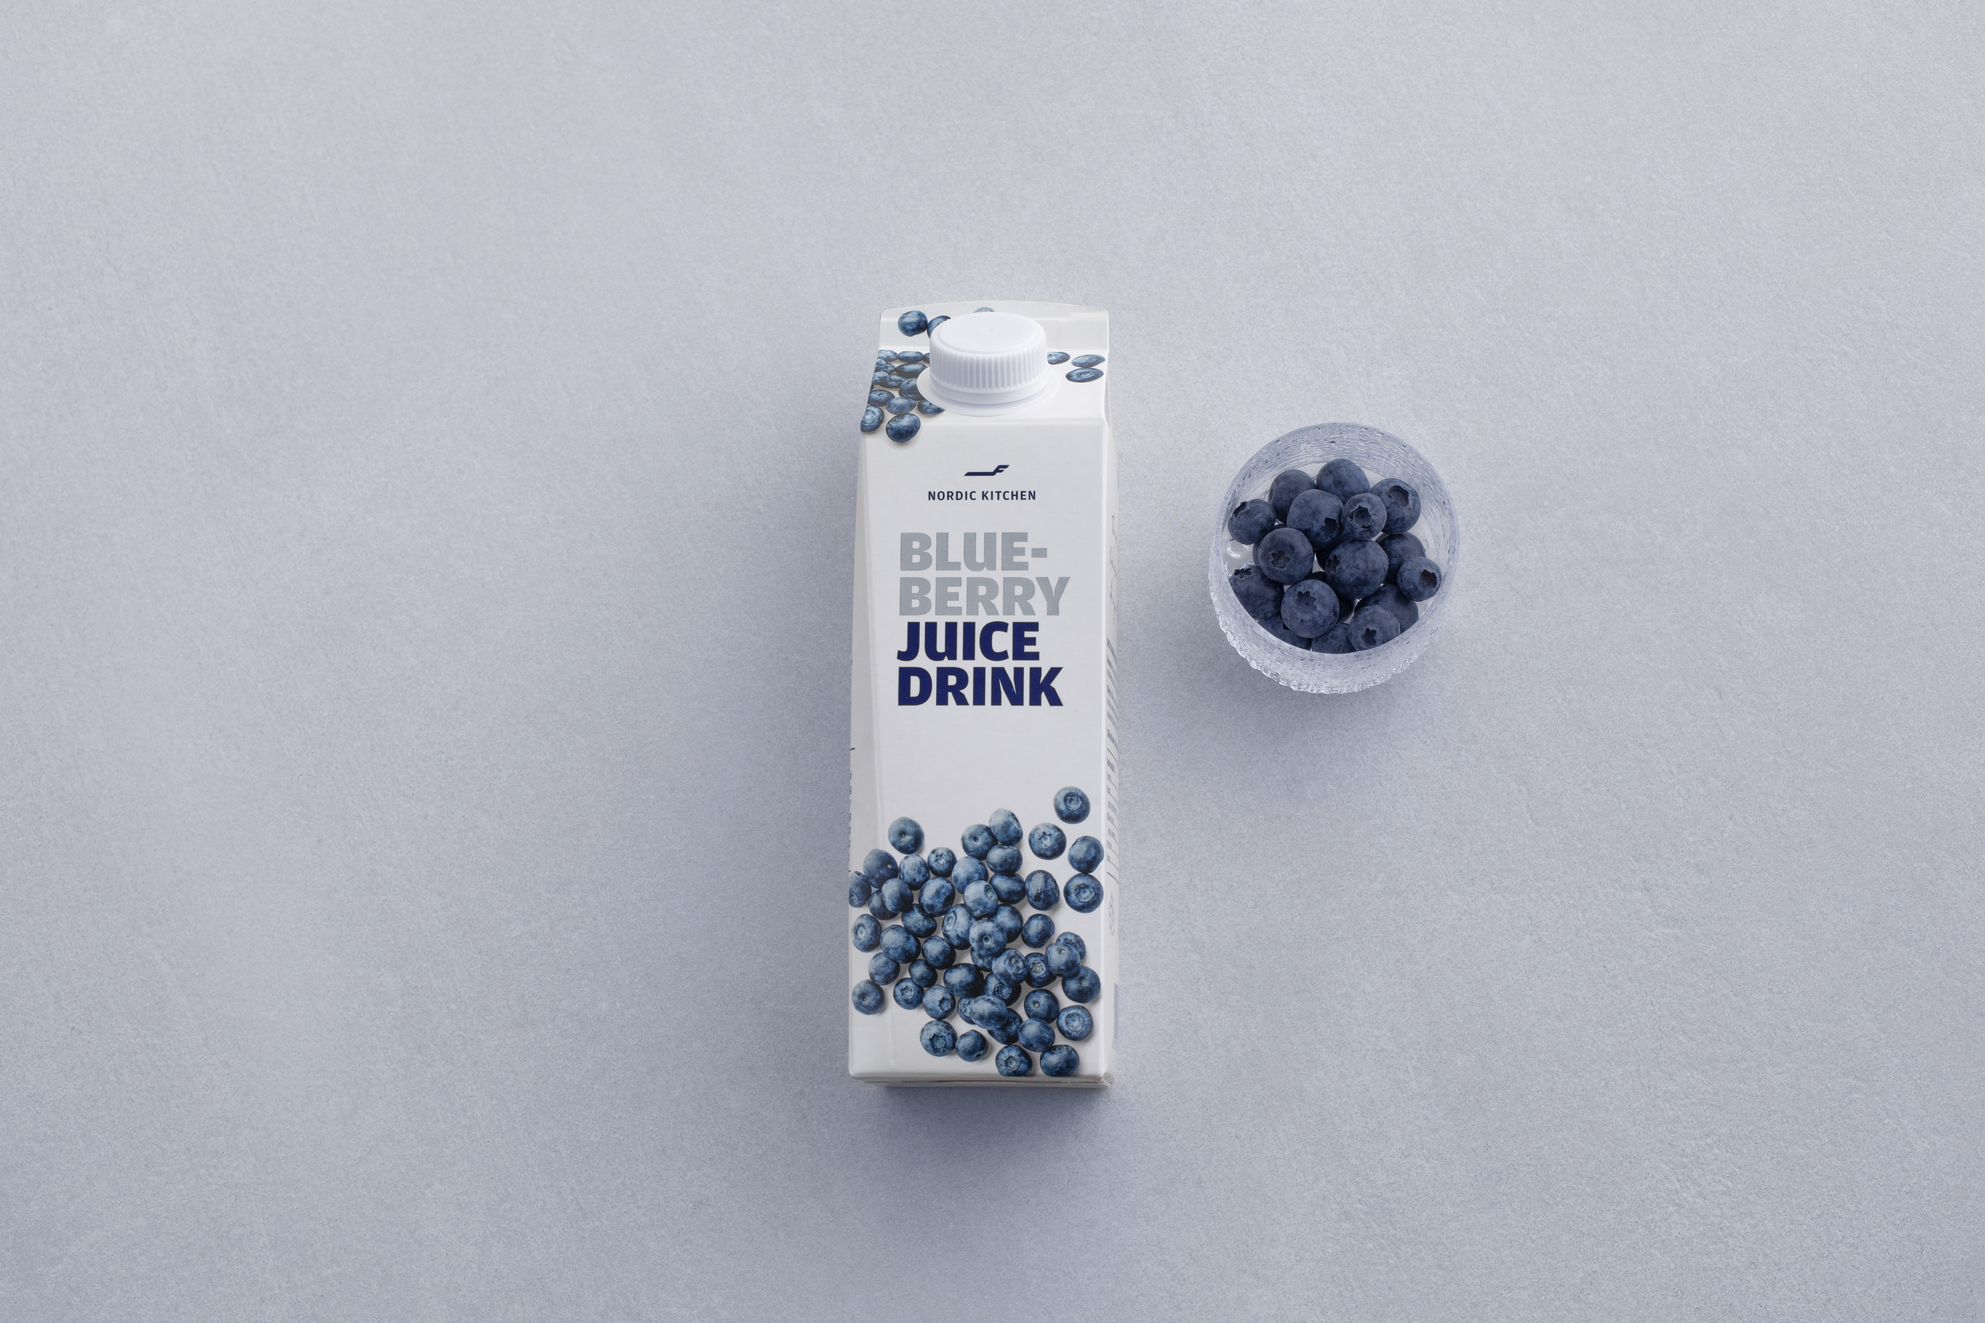 Finnair Blueberry juice